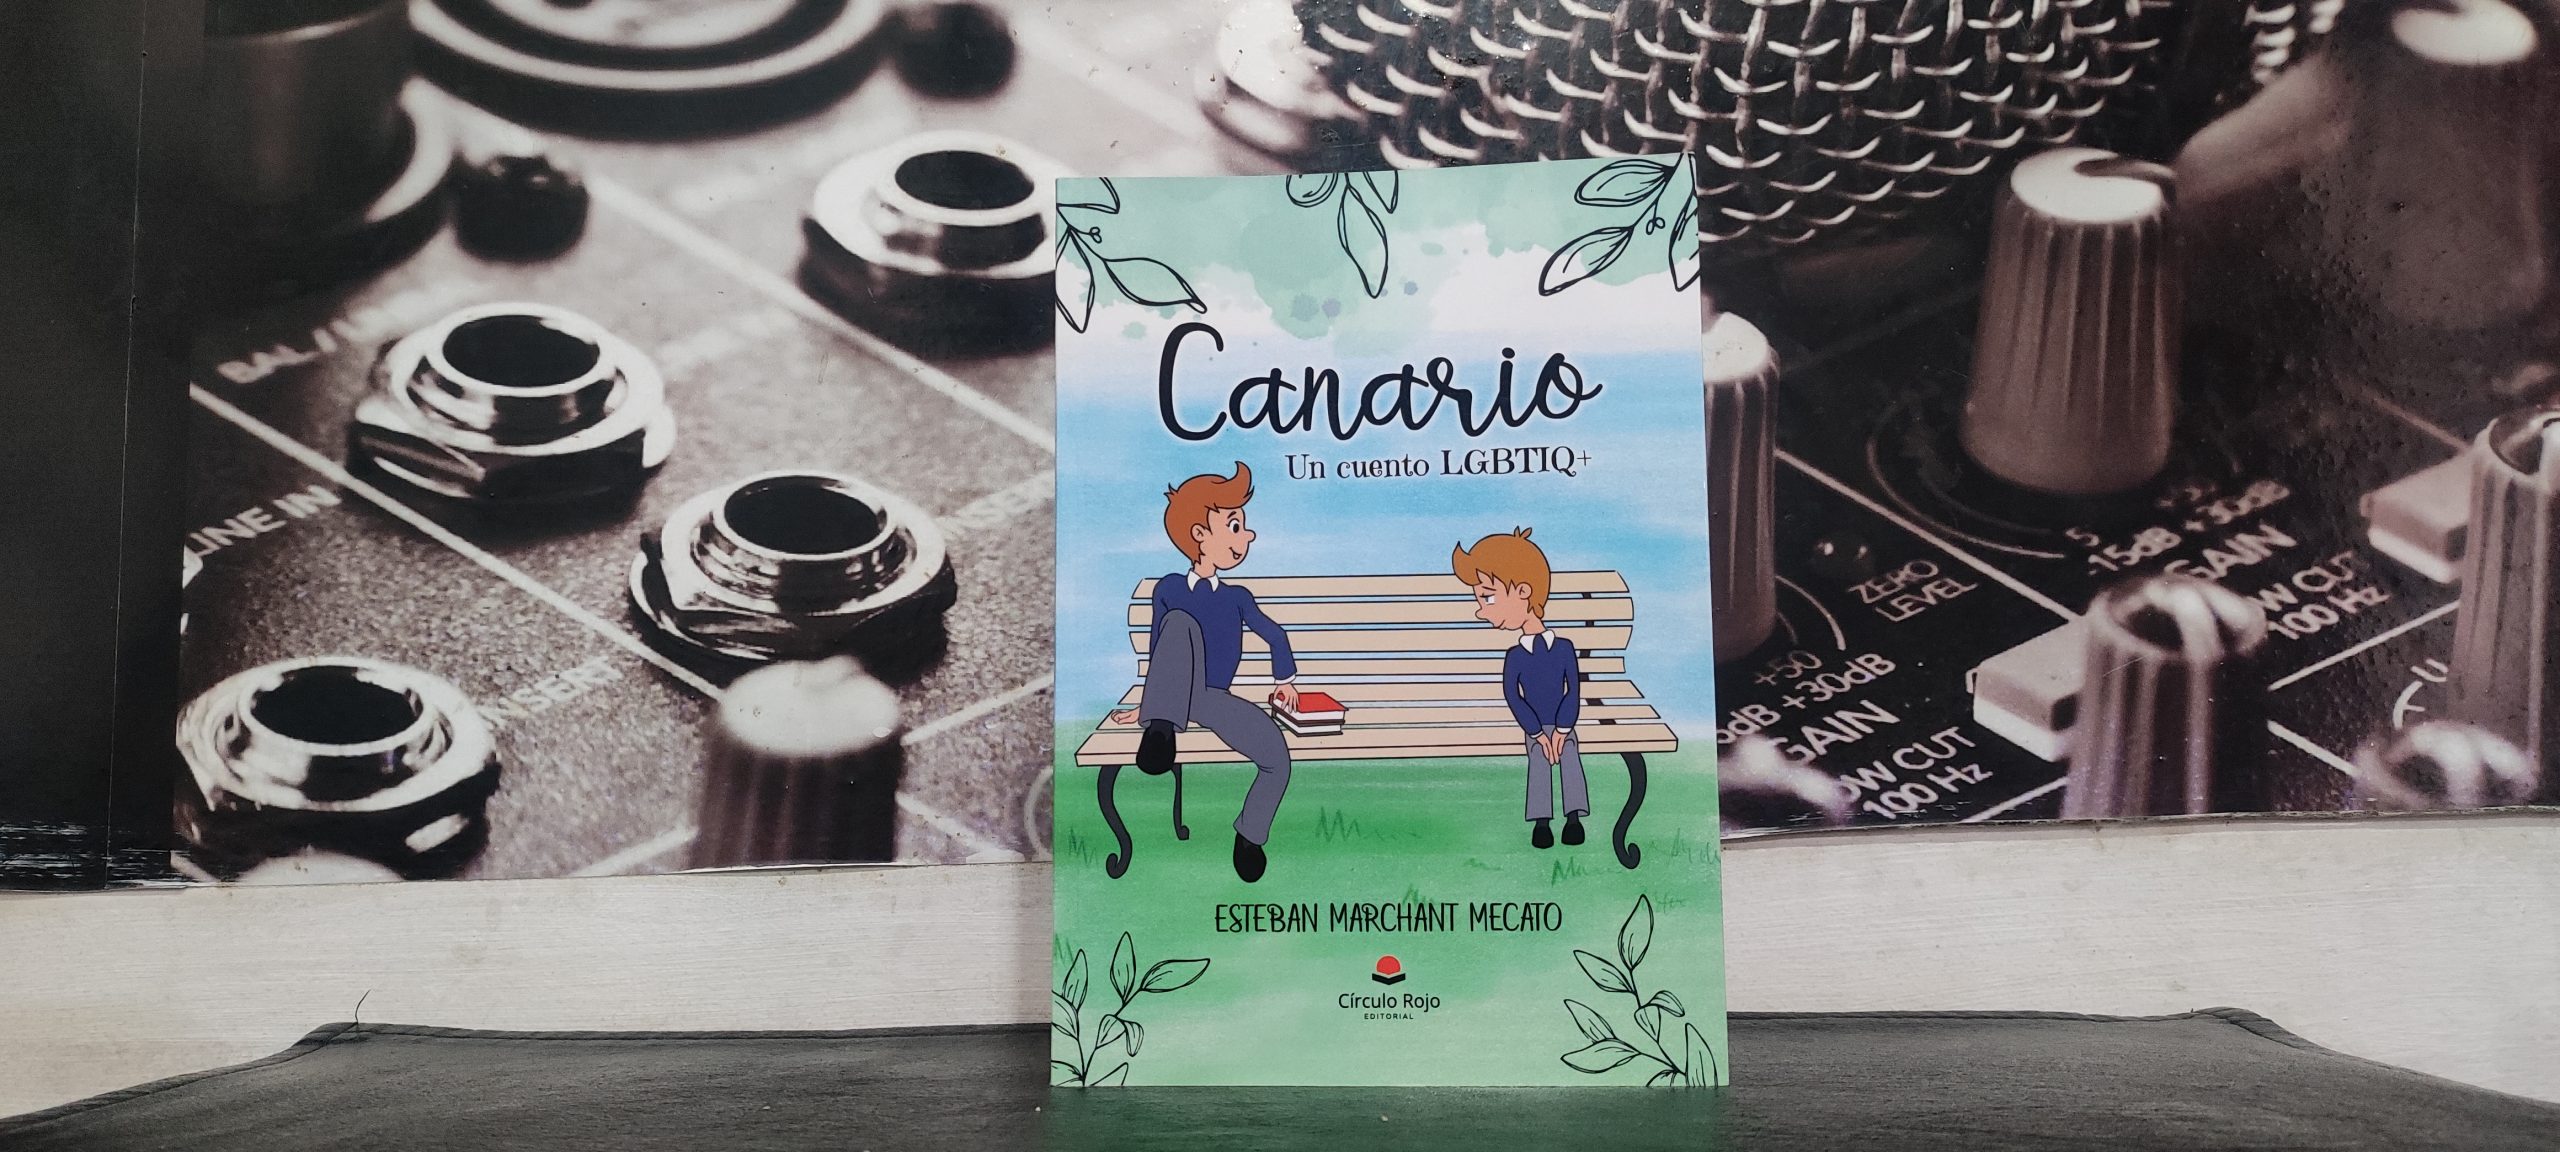 Reseña de “Canario”, de Esteban Marchant Mecato | Por Lidia Sánchez